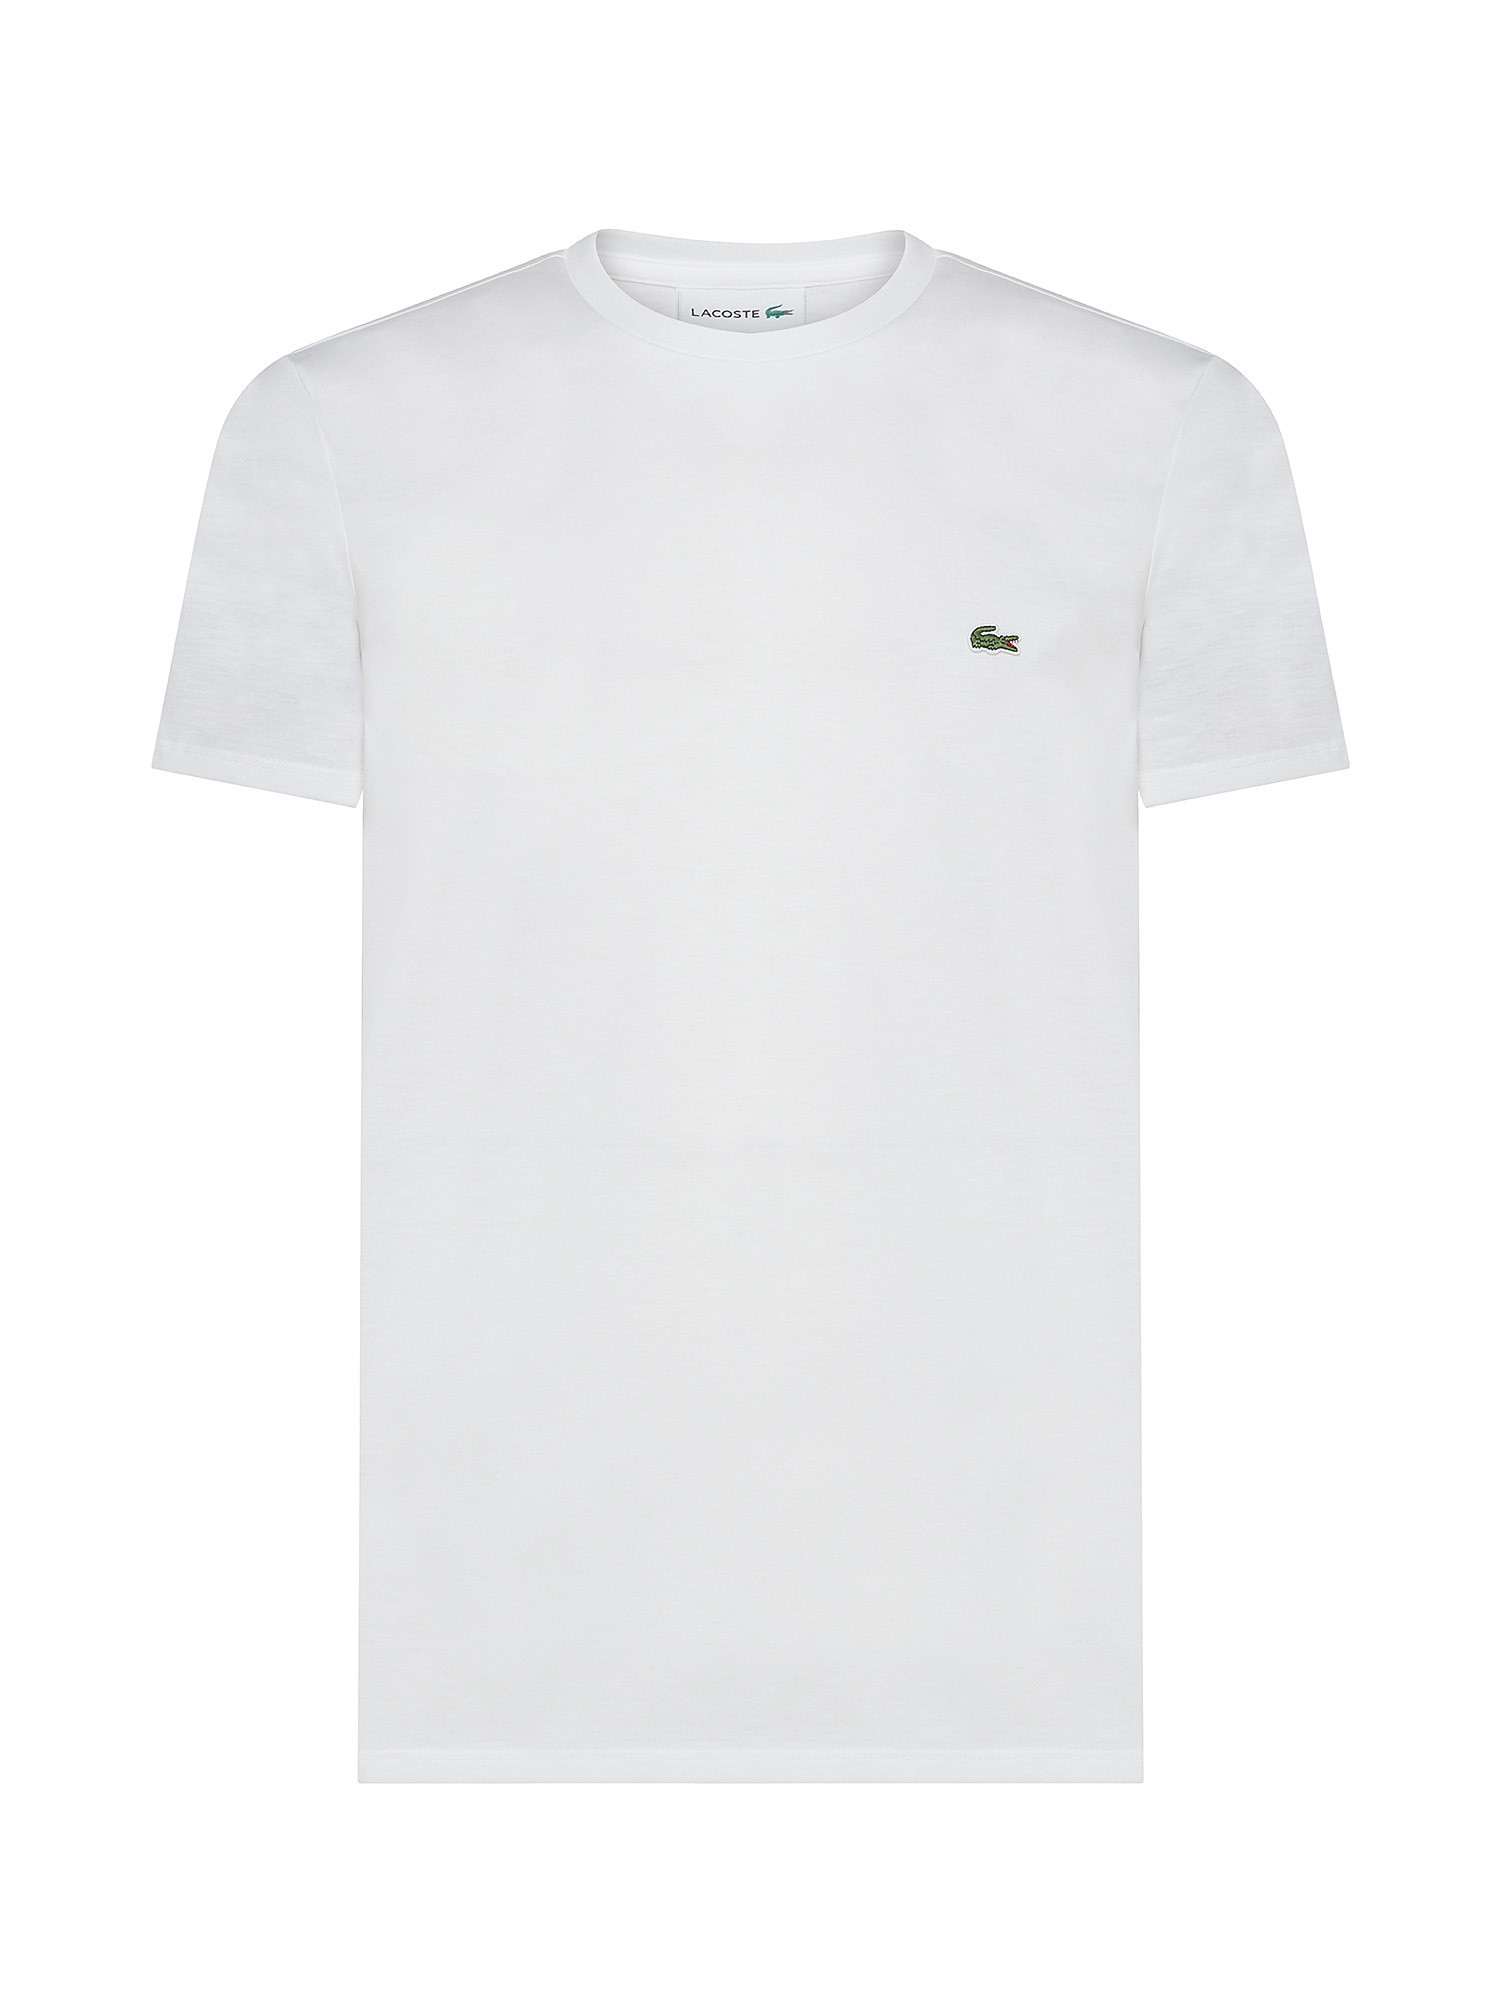 Lacoste - Pima cotton jersey crewneck T-shirt, White, large image number 0